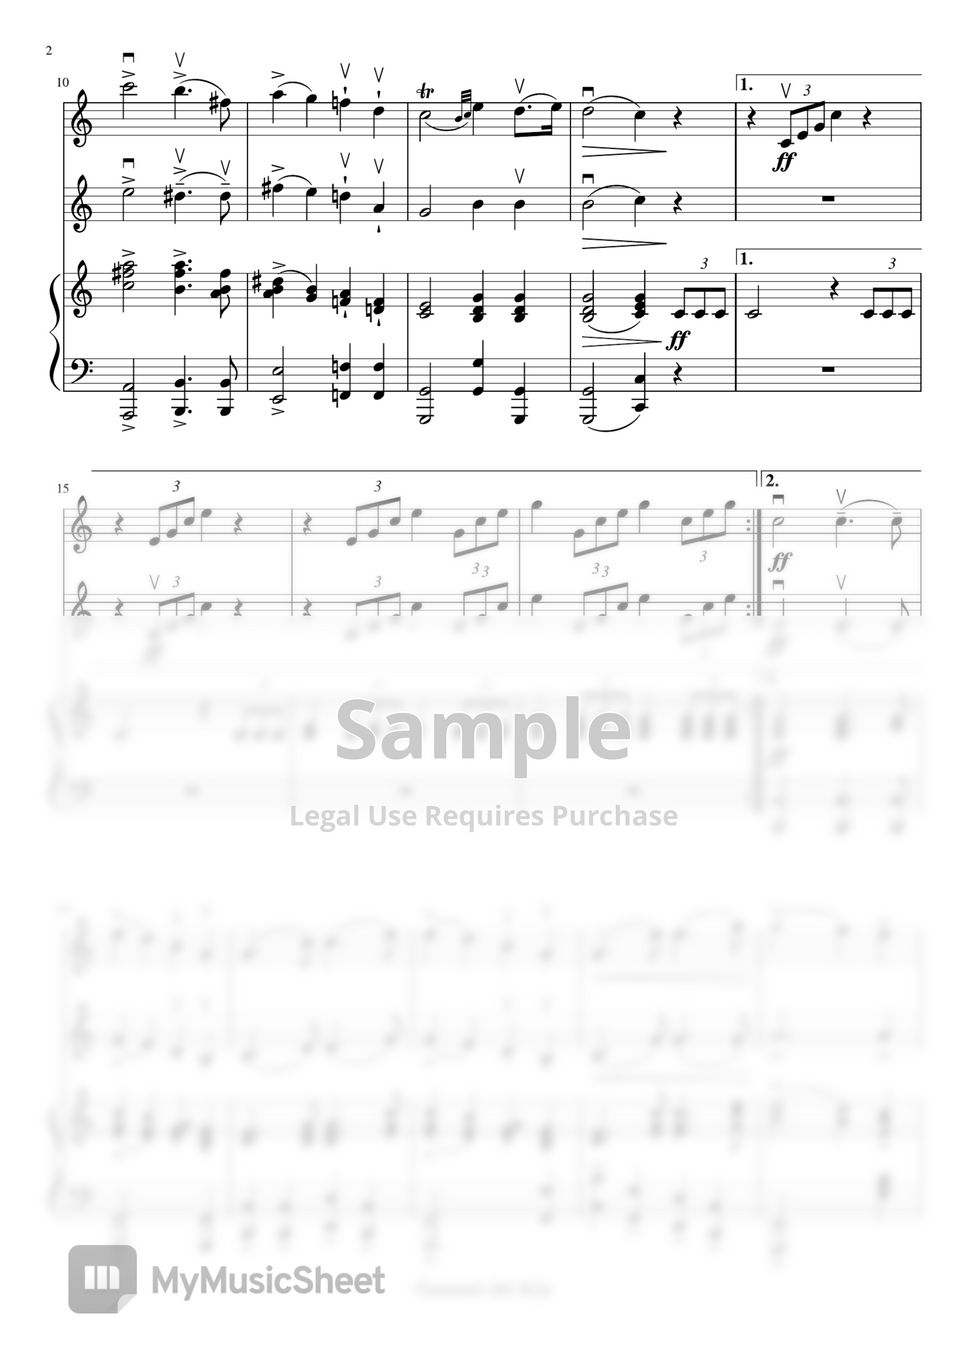 F. Mendelssohn - Wedding March for 2 Violins and Piano (Short Version) by Guarneri del Jeju